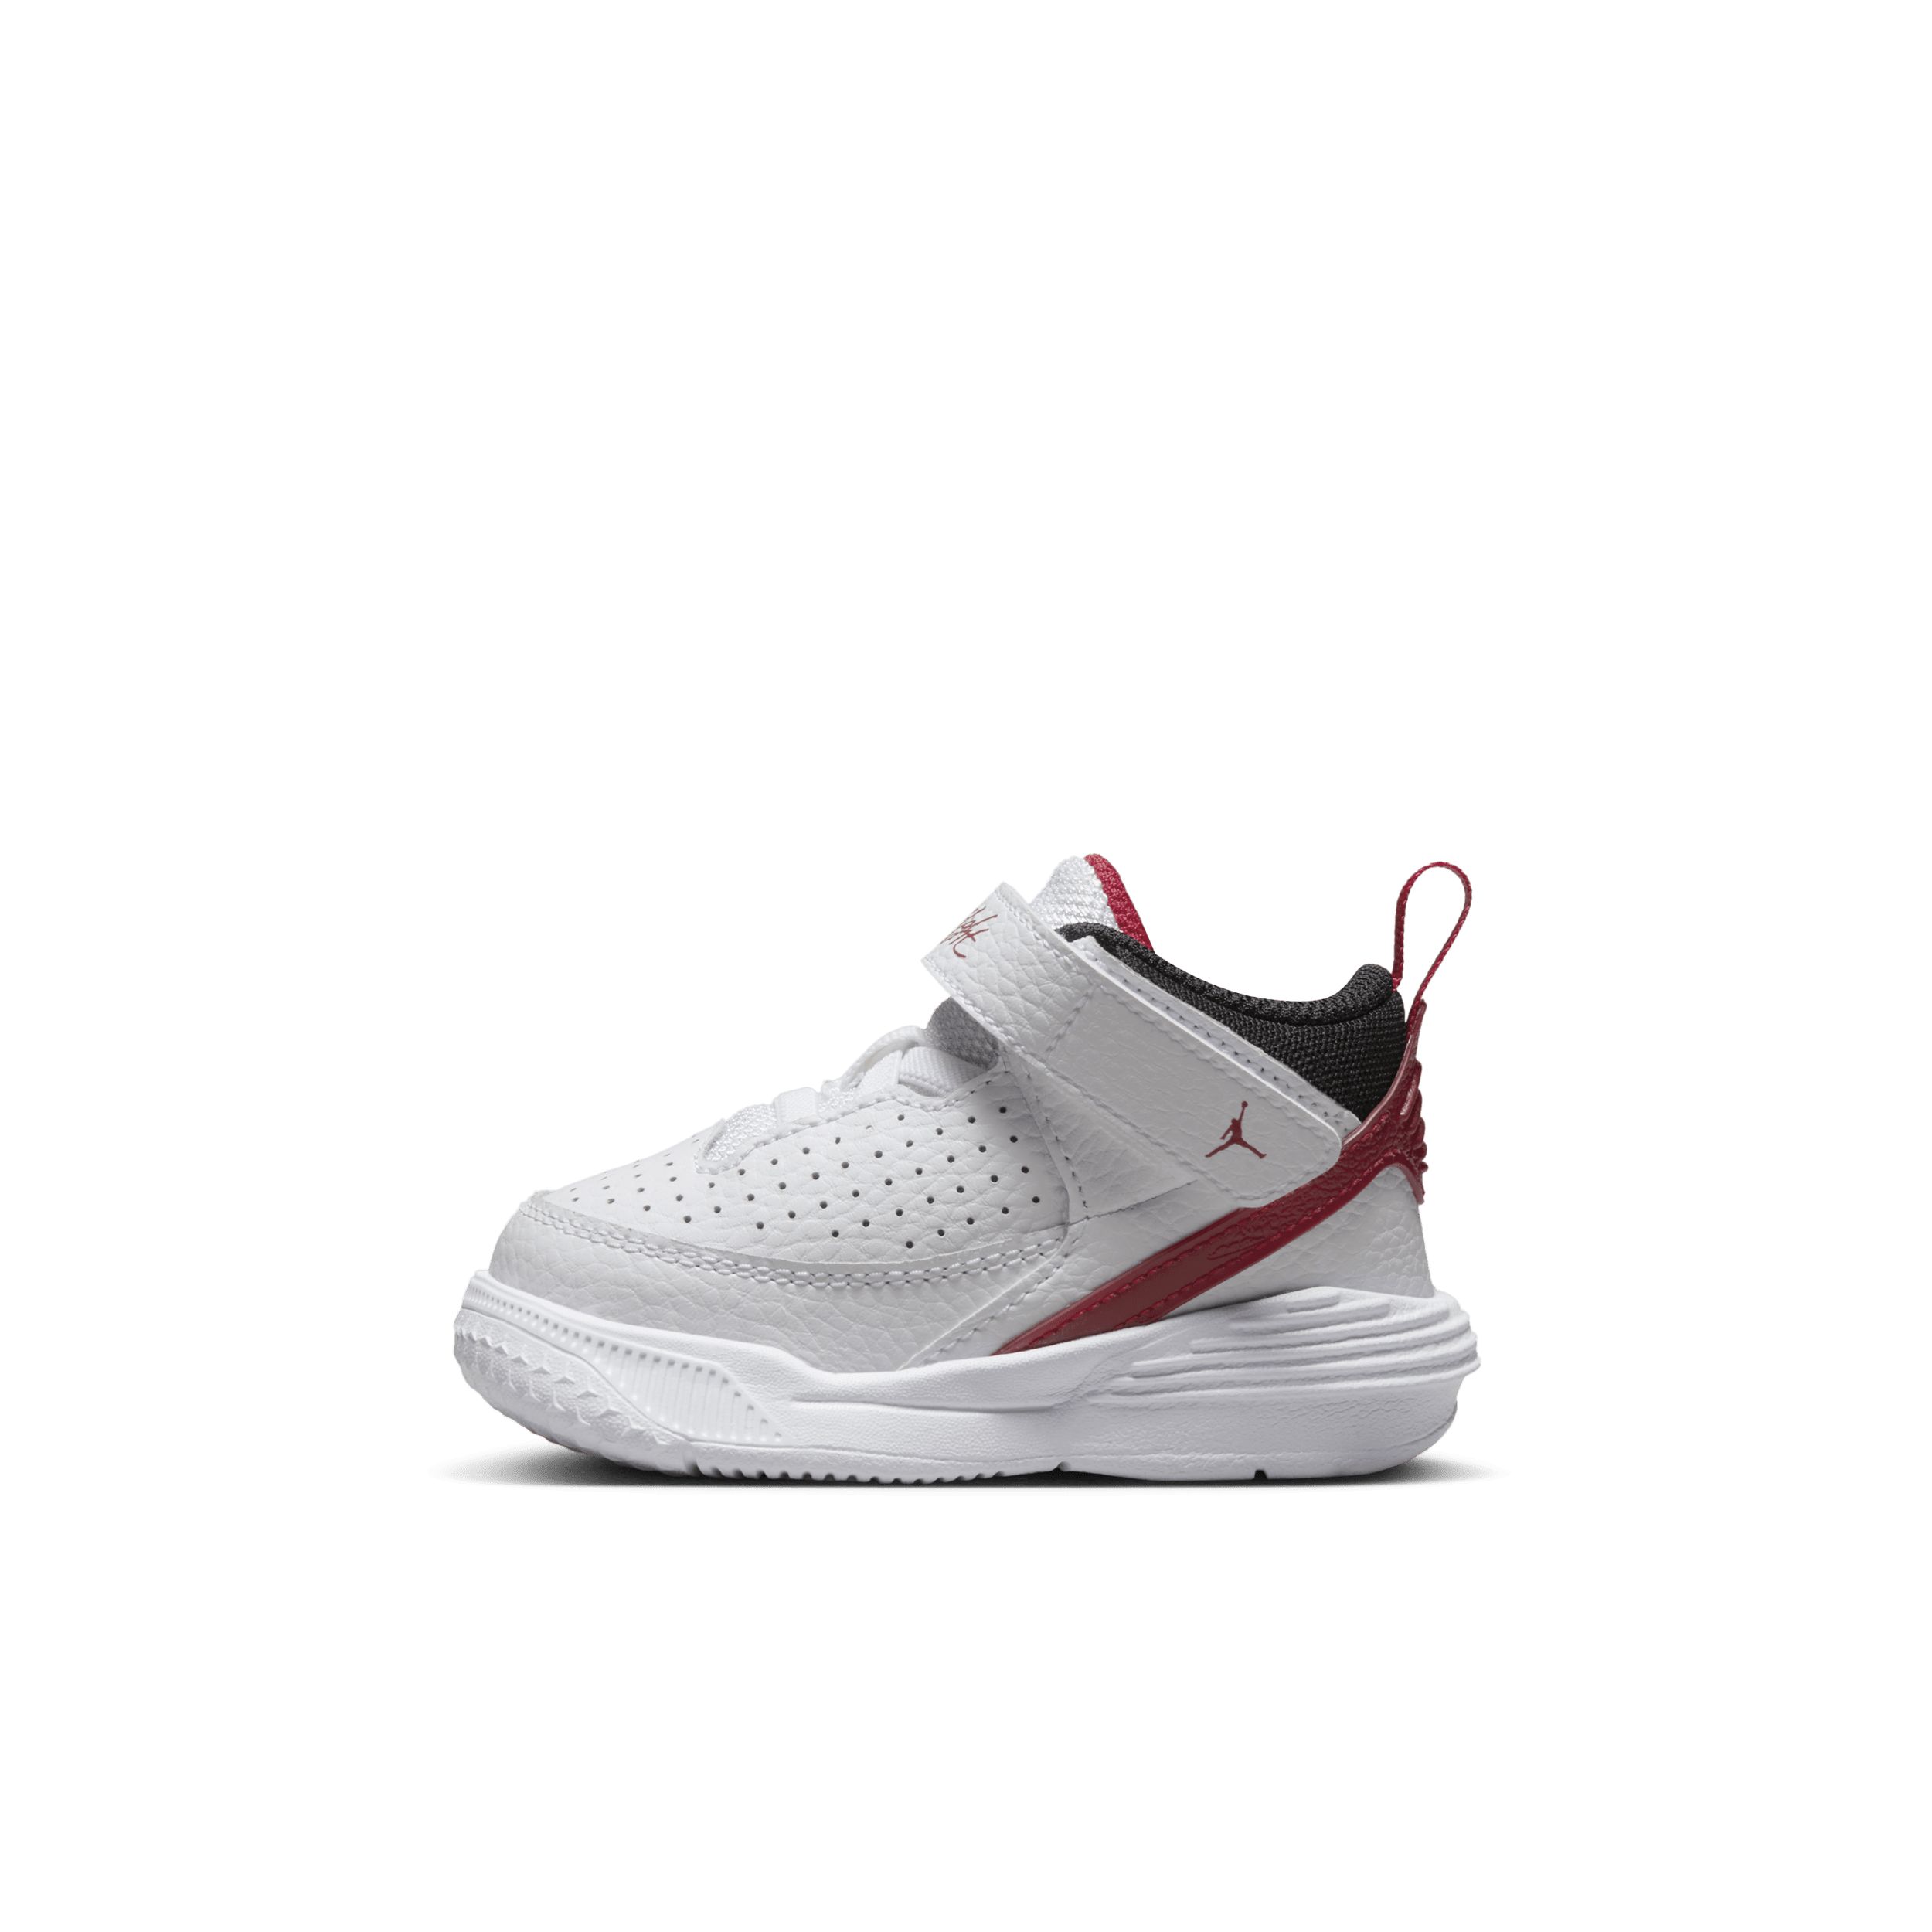 Jordan Max Aura 5-sko til babyer/småbørn - hvid